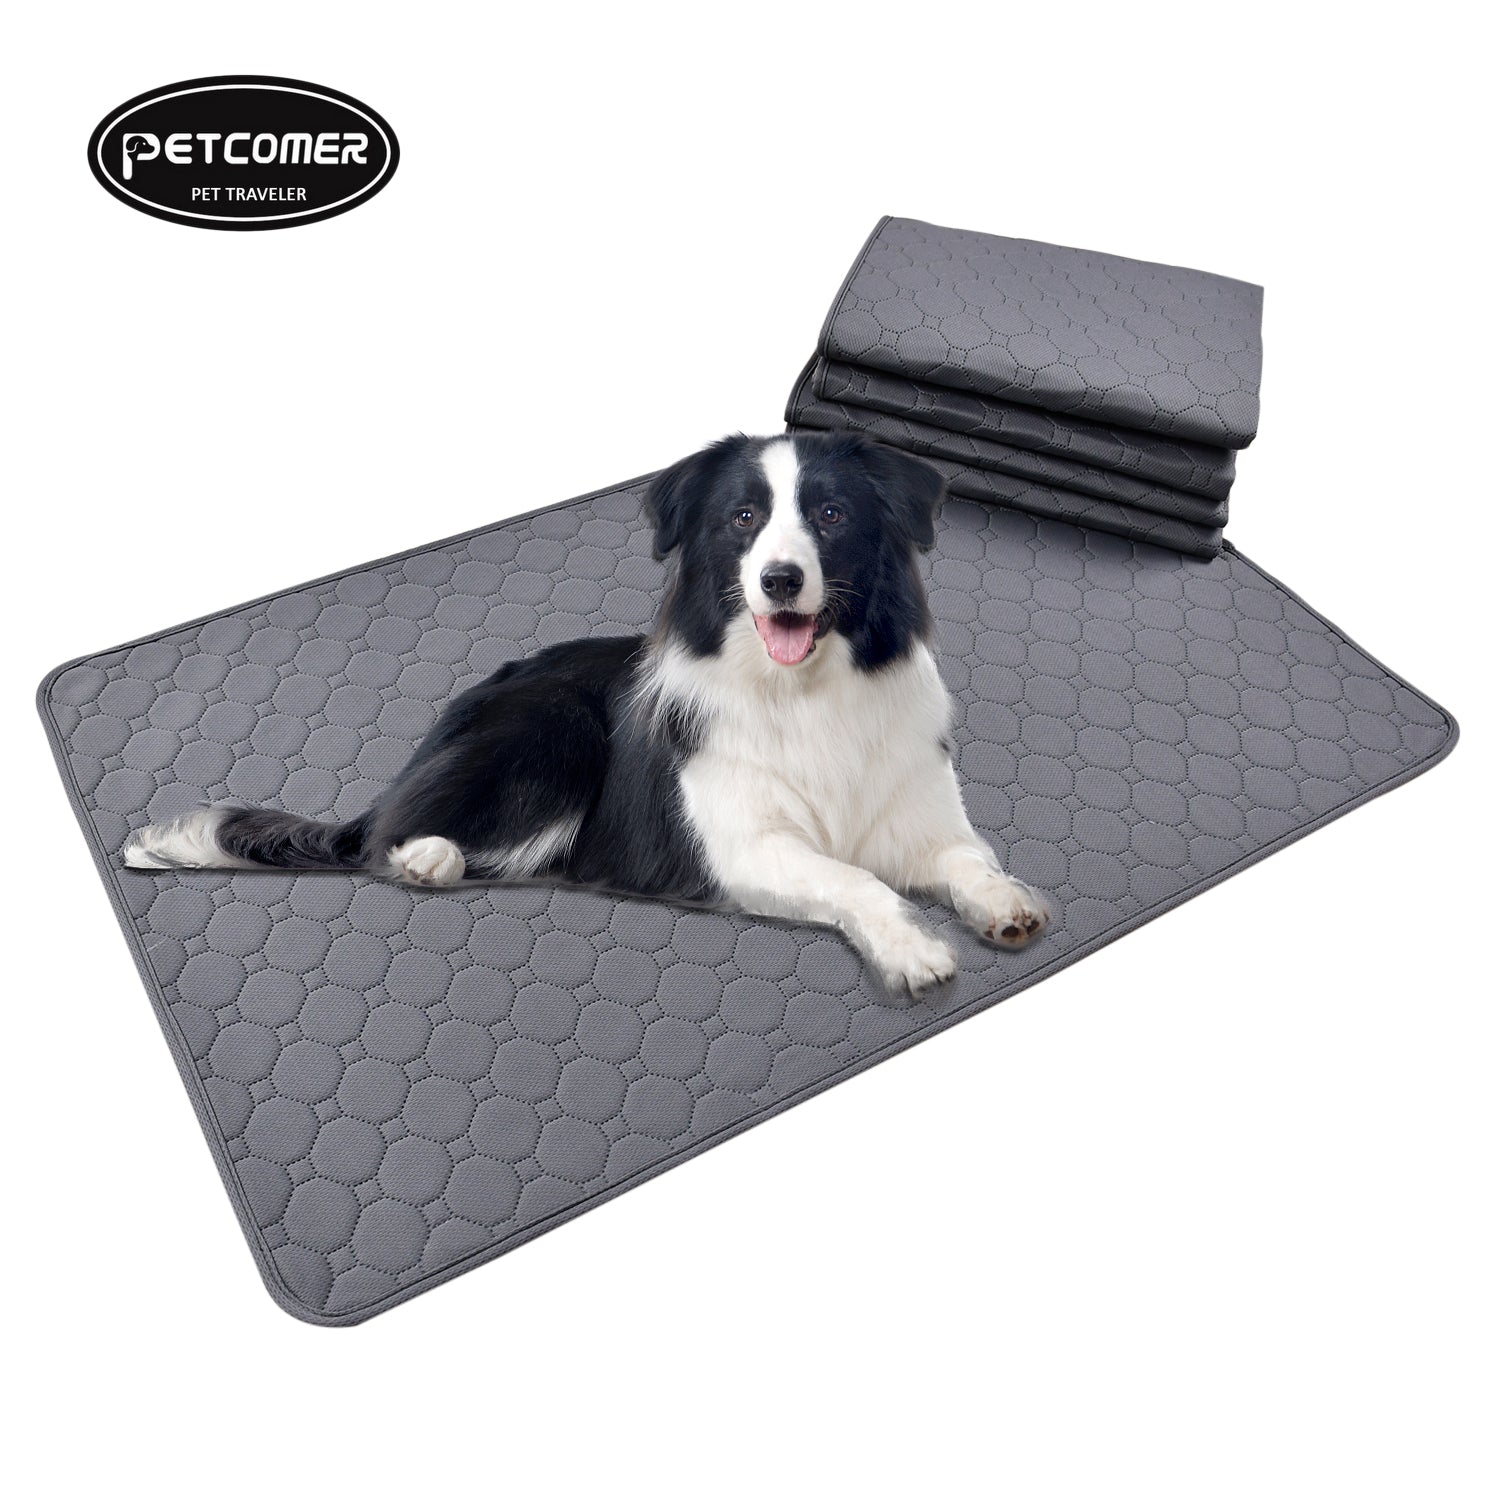 PETCOMER PET TRAVELER Dog Cooling Cushions Pad, Pet Summer Sleeping Mat Blanket Cushion Bed Mat, Grey,  27.5"x22"